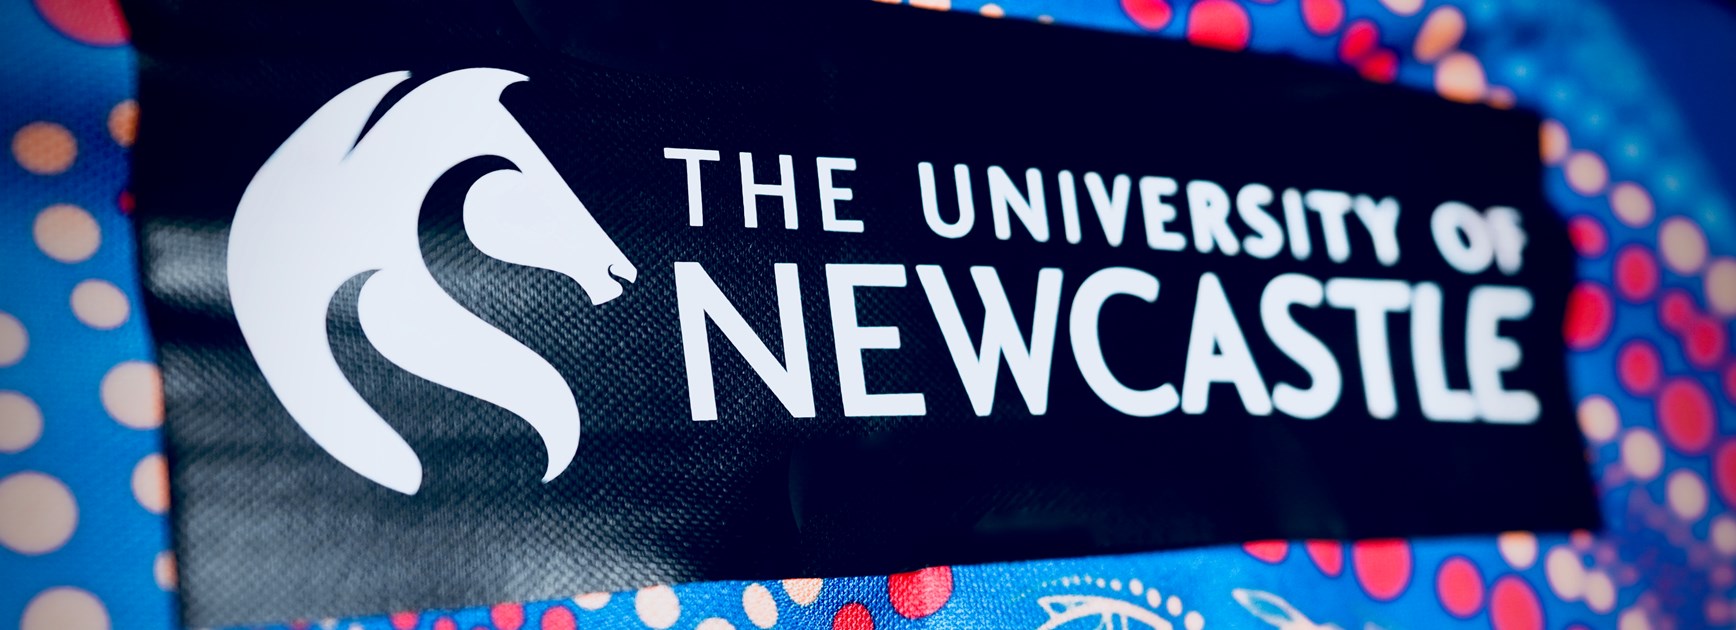 University of Newcastle joins back of jersey